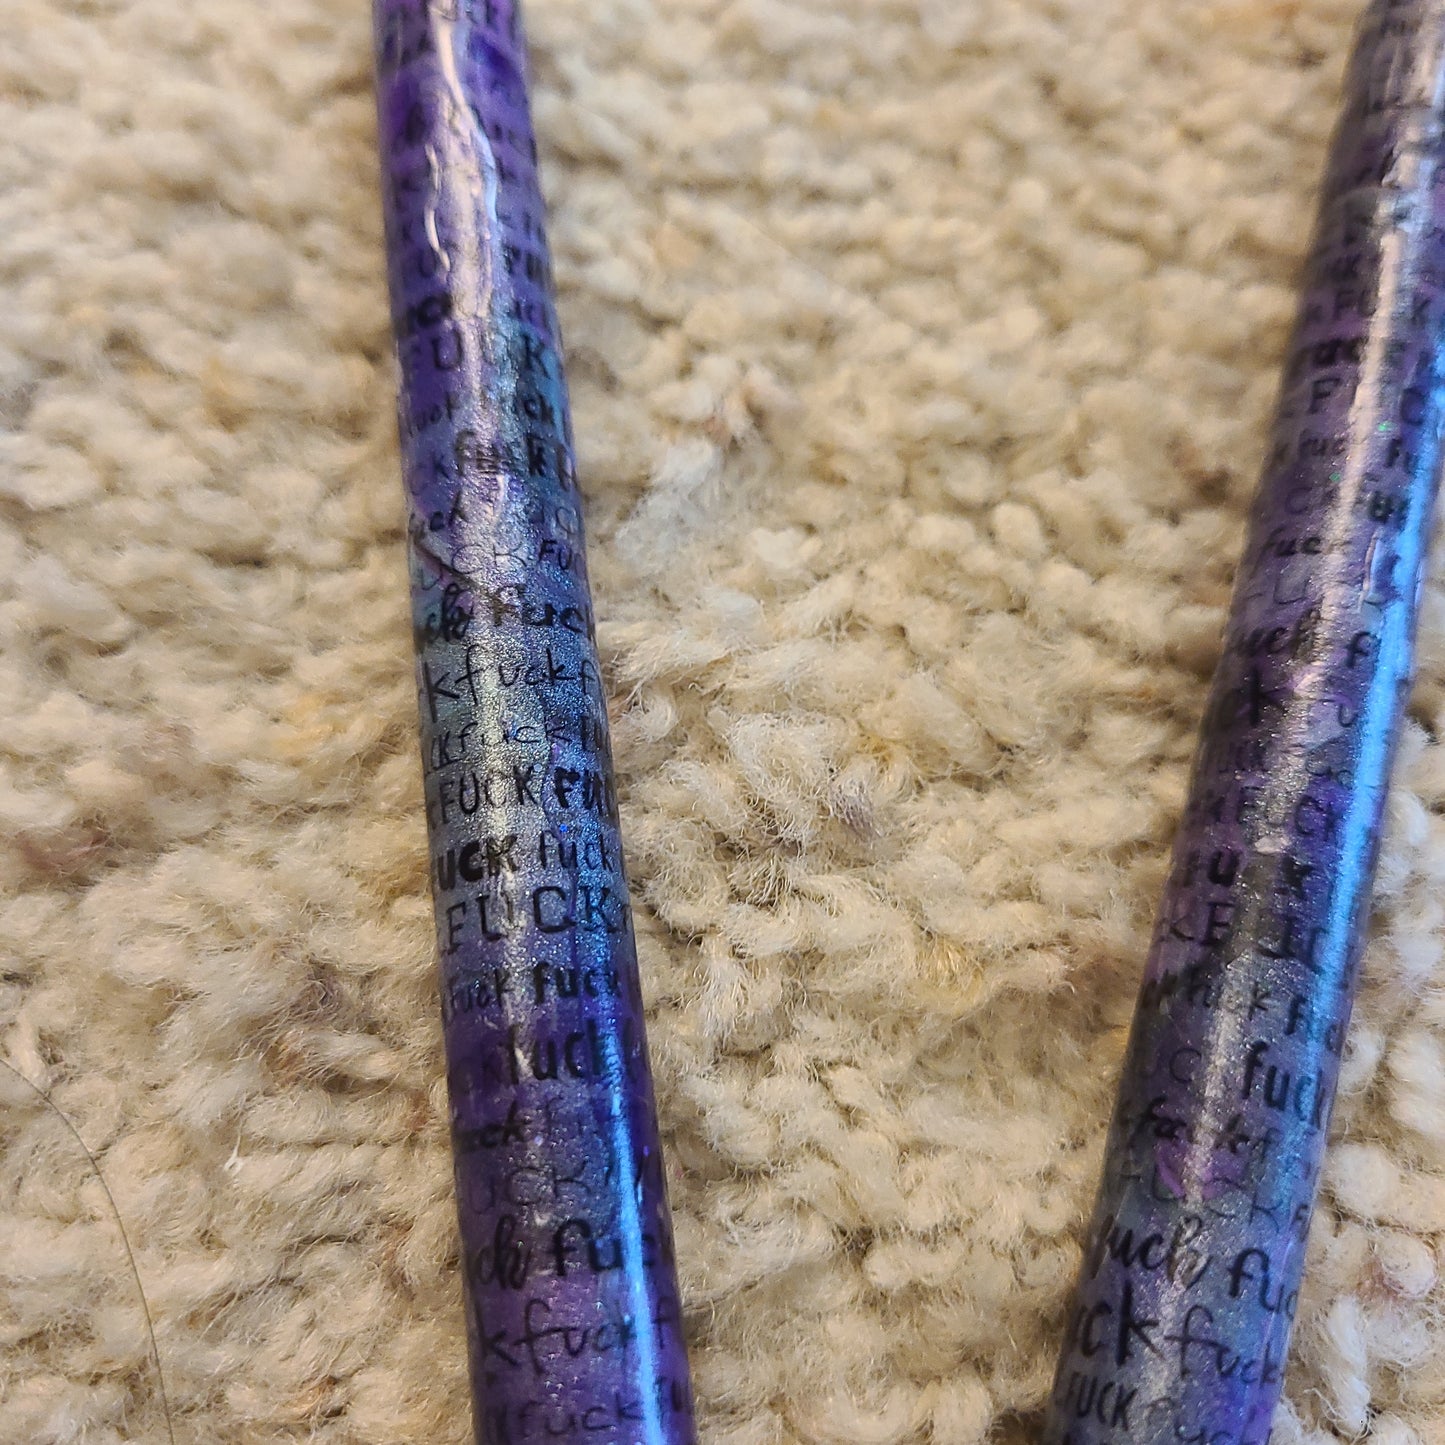 Fuck Pen/Pencil